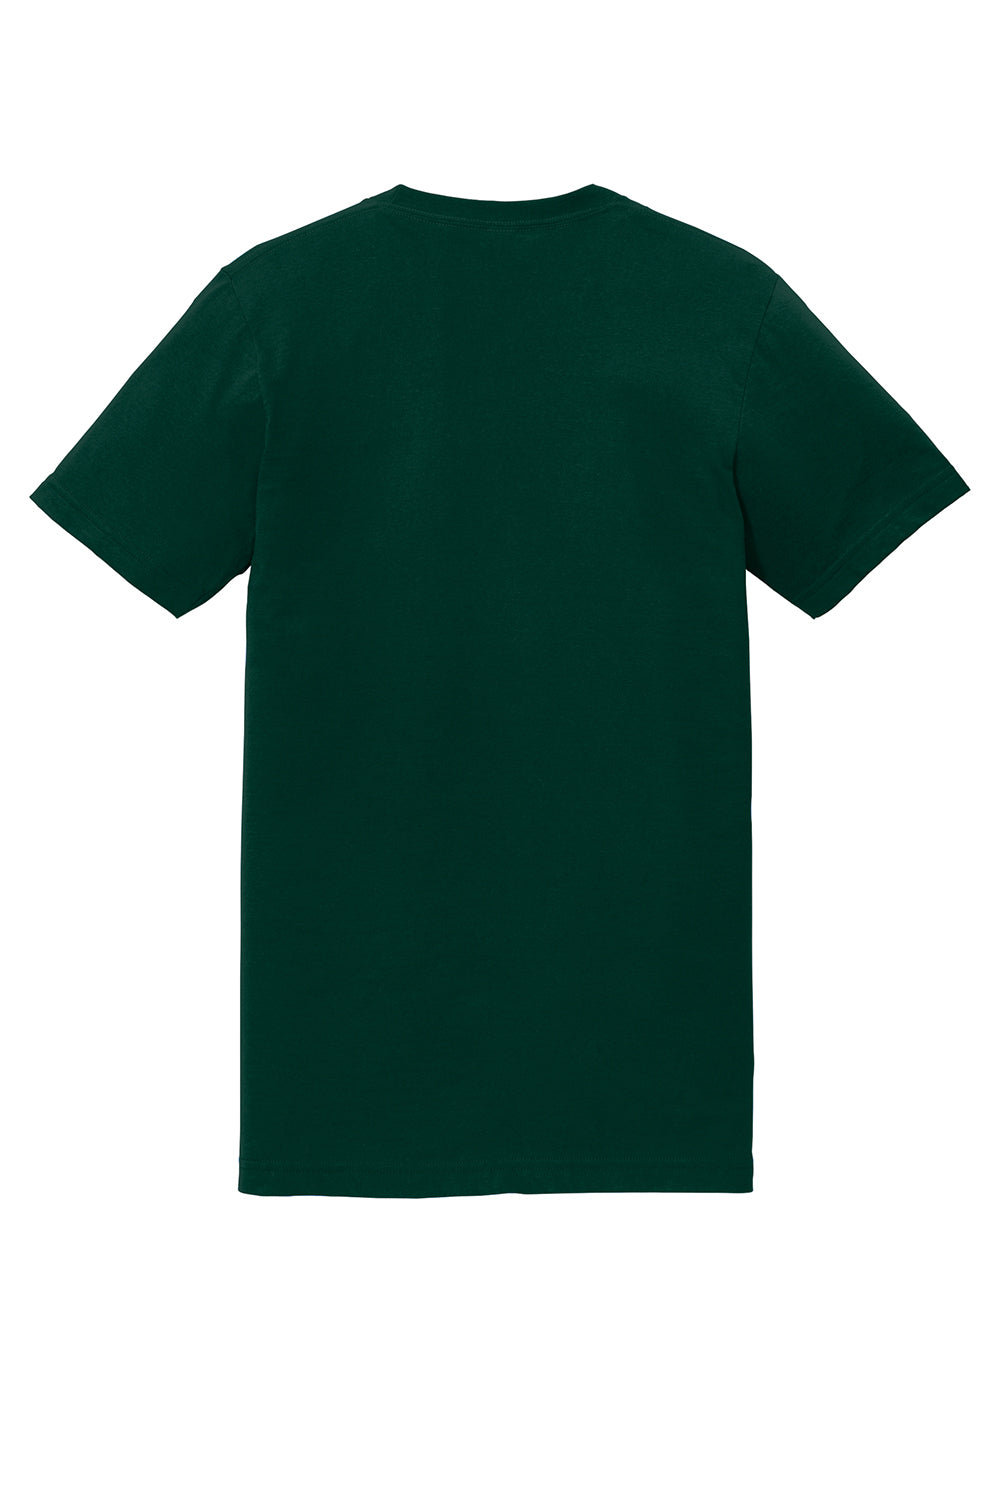 American Apparel 2001 Mens Fine Jersey Short Sleeve Crewneck T-Shirt Forest Green Flat Back